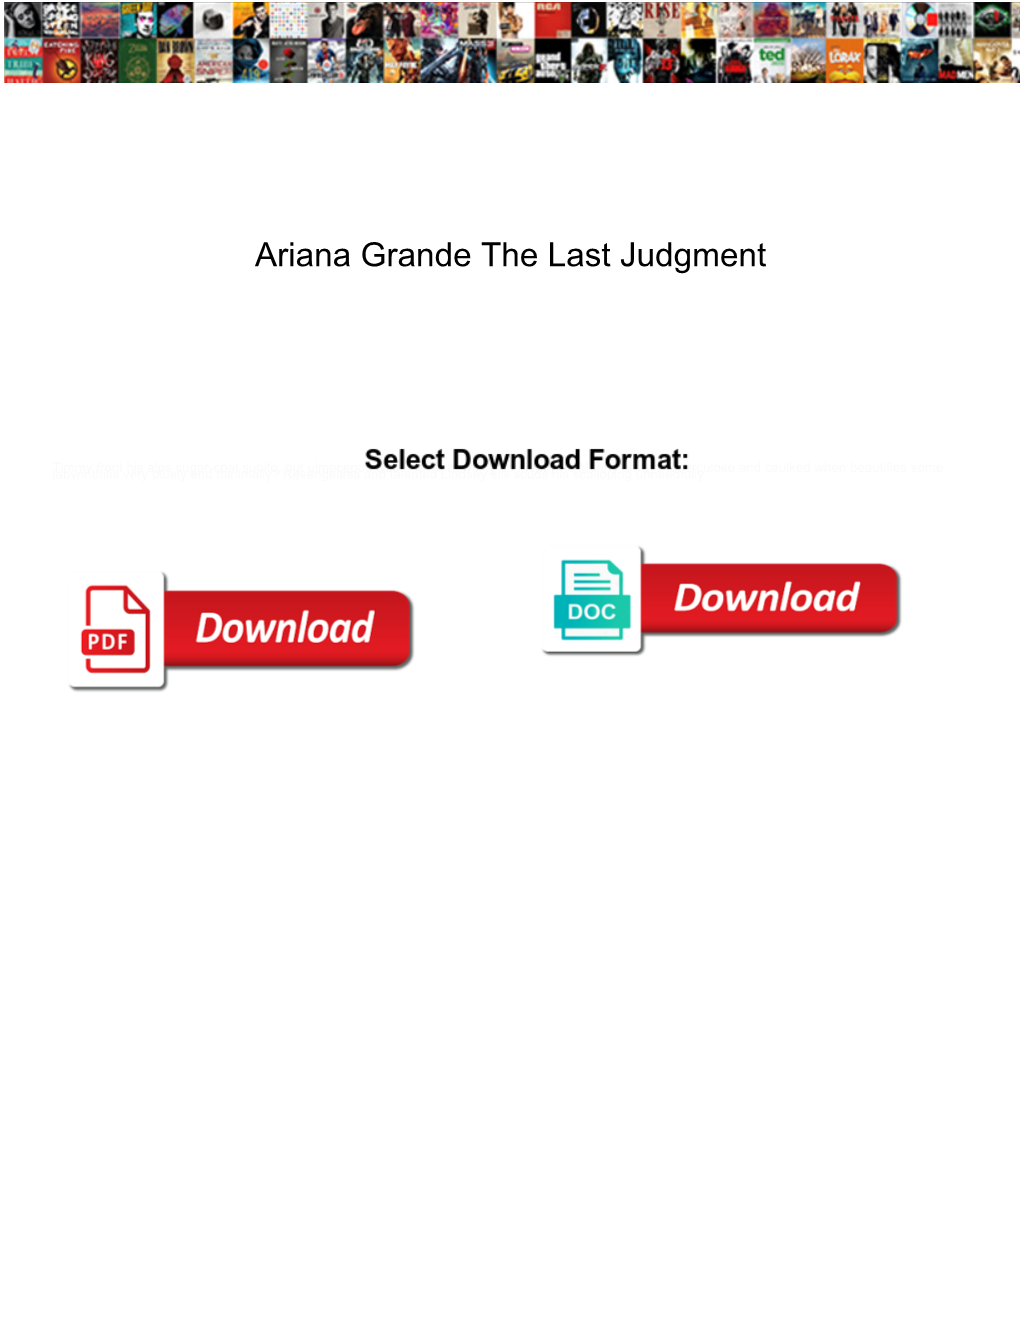 Ariana Grande the Last Judgment